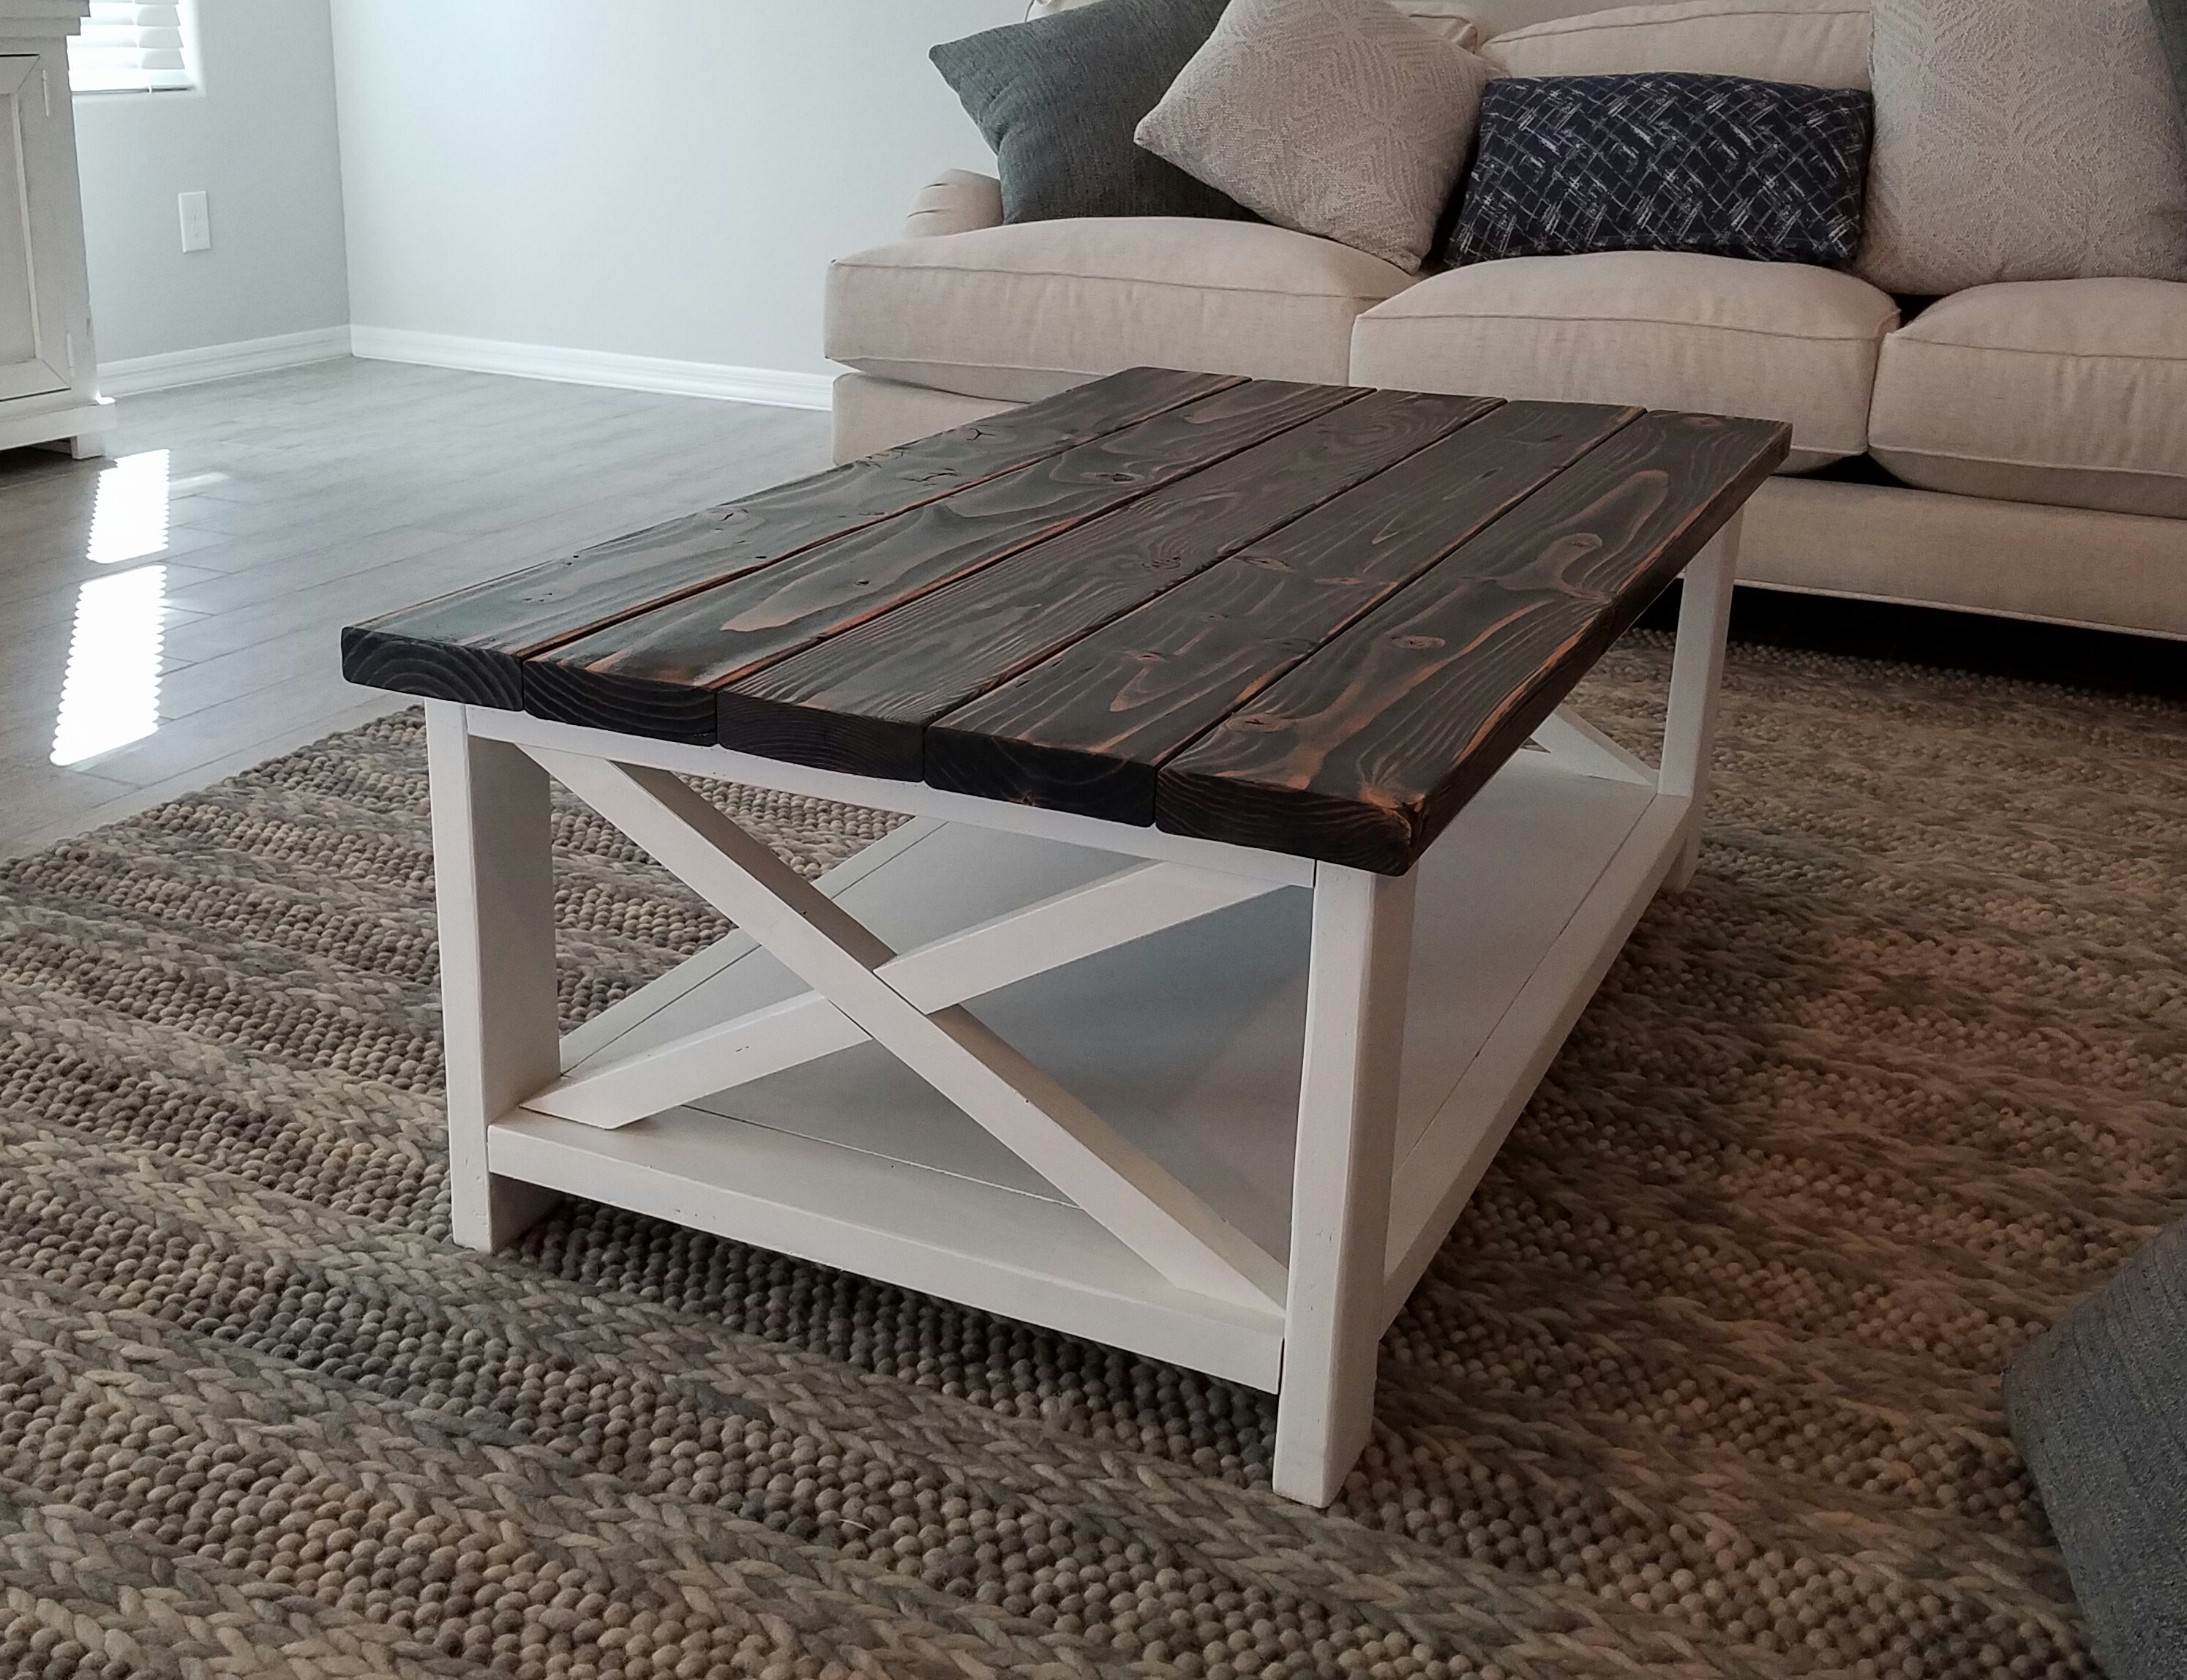 2 Tone Rustic Coffee Table Tripledigit Wood Design